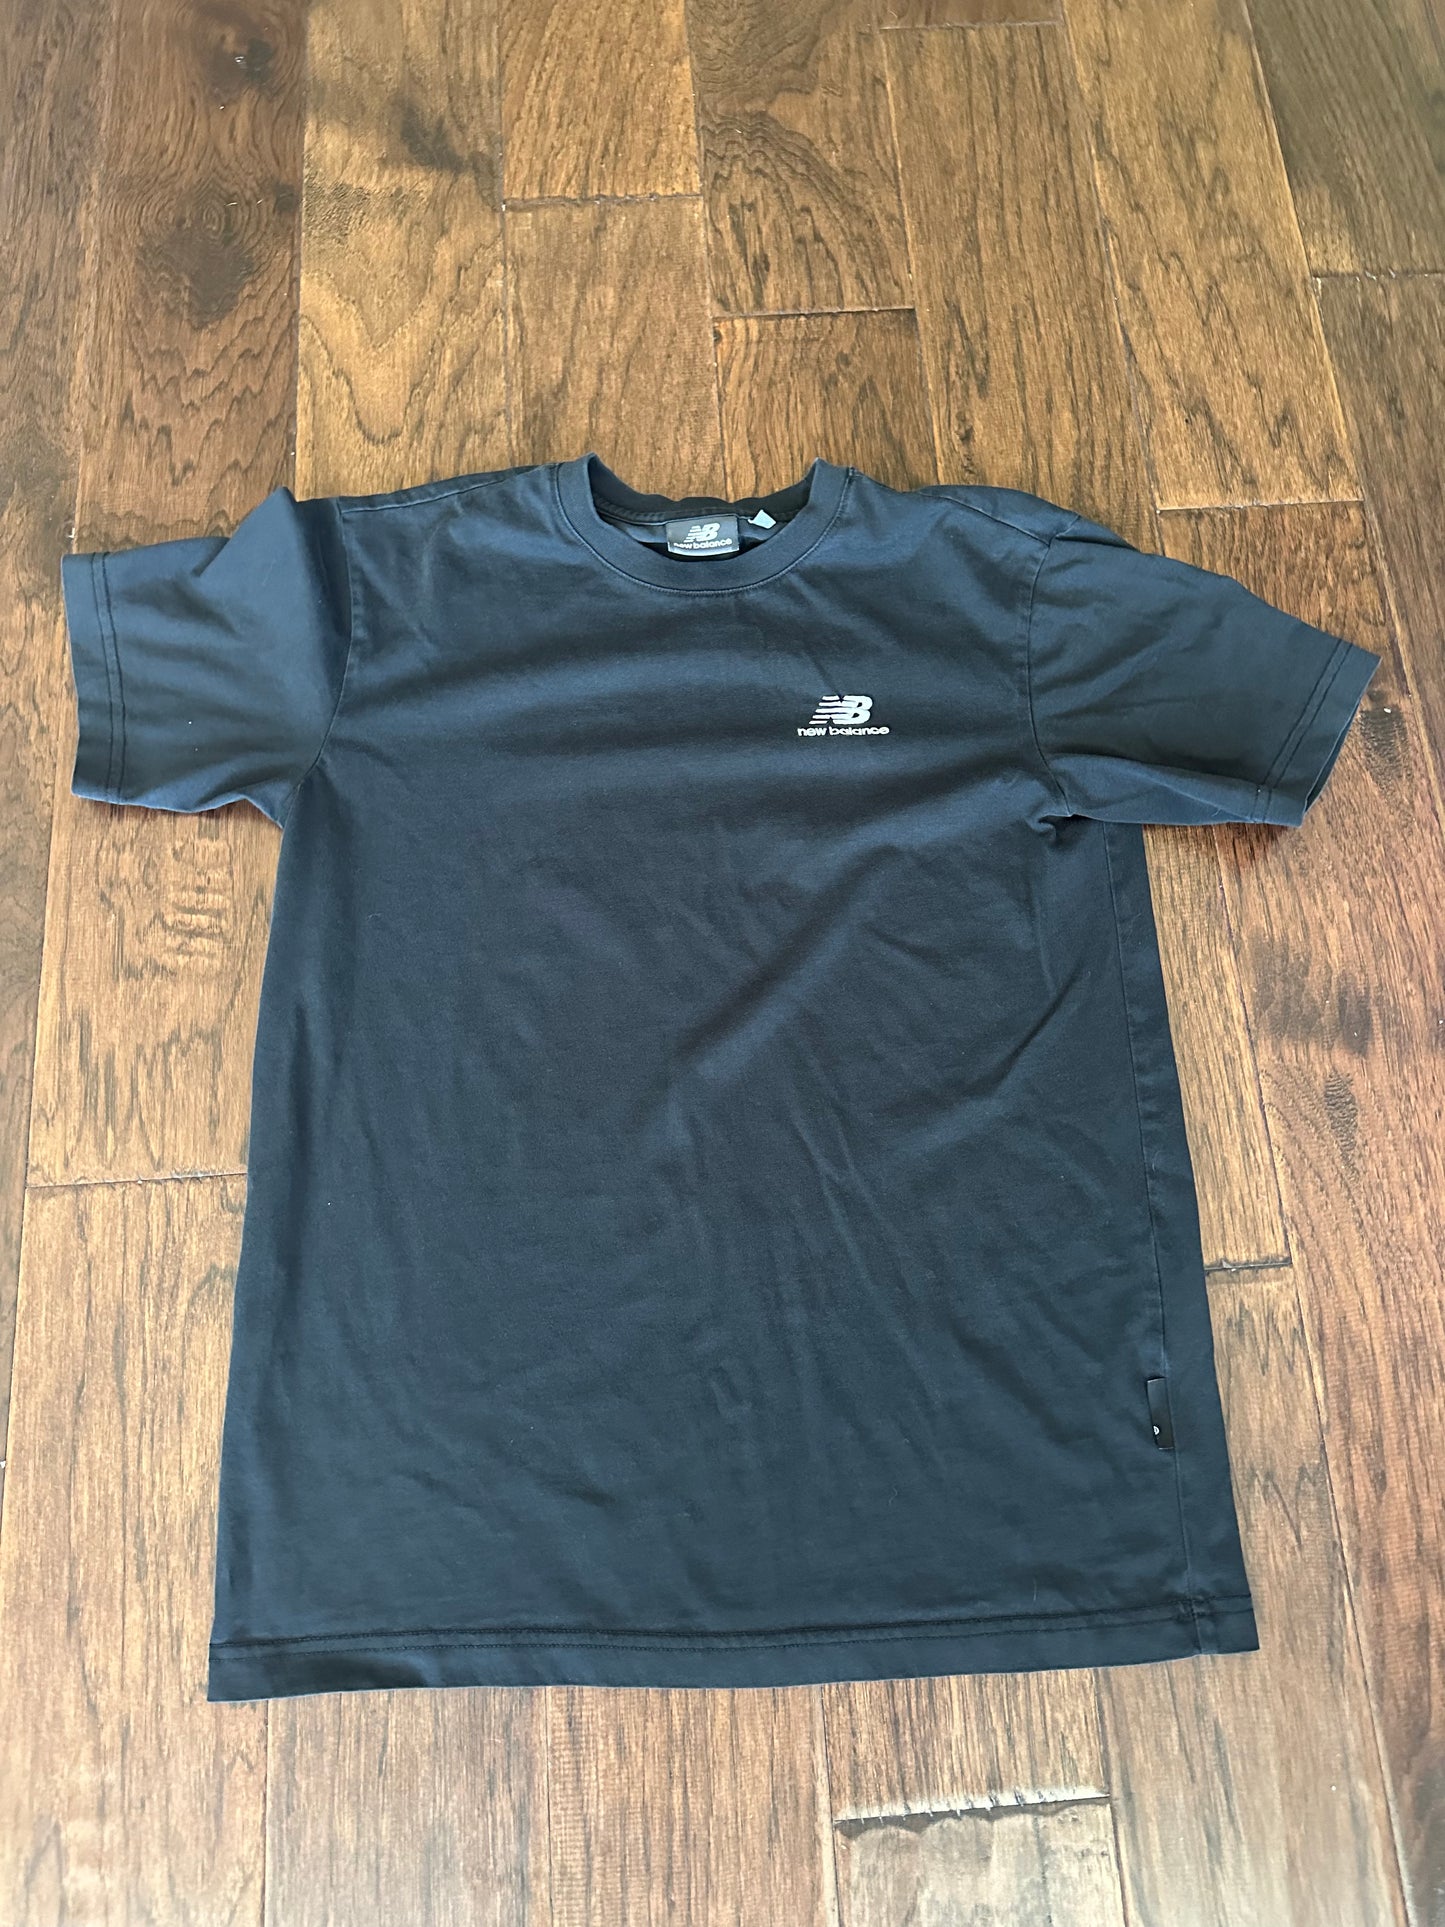 New Balance - Black Shirt - Small